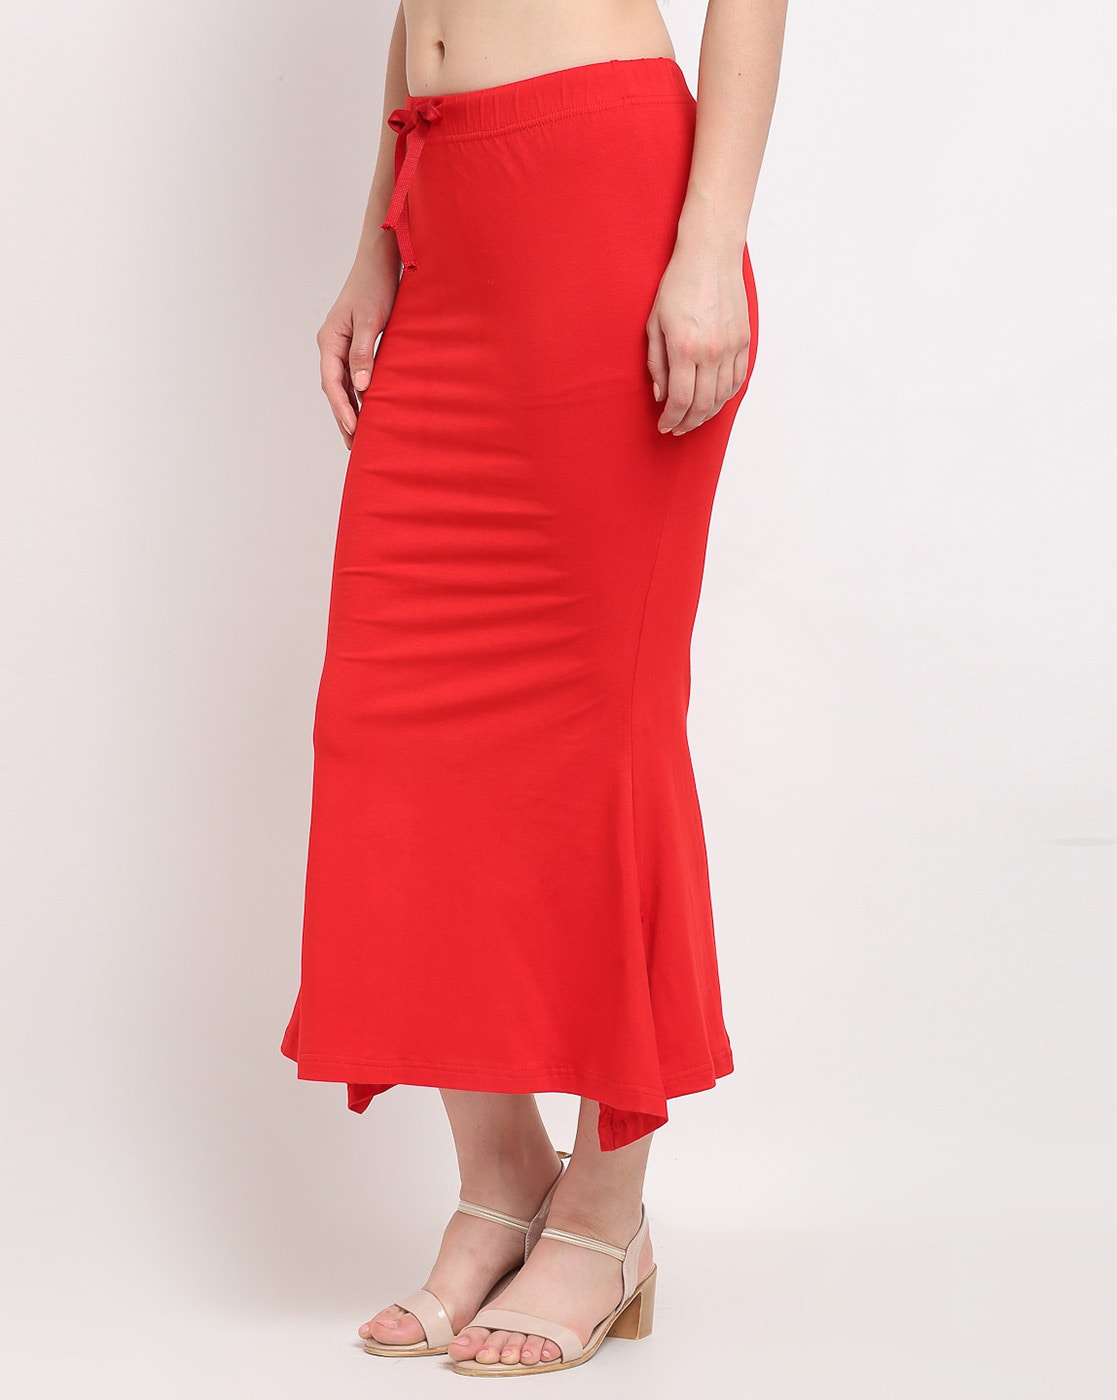 Buy Red Shapewear for Women by Sugathari Online